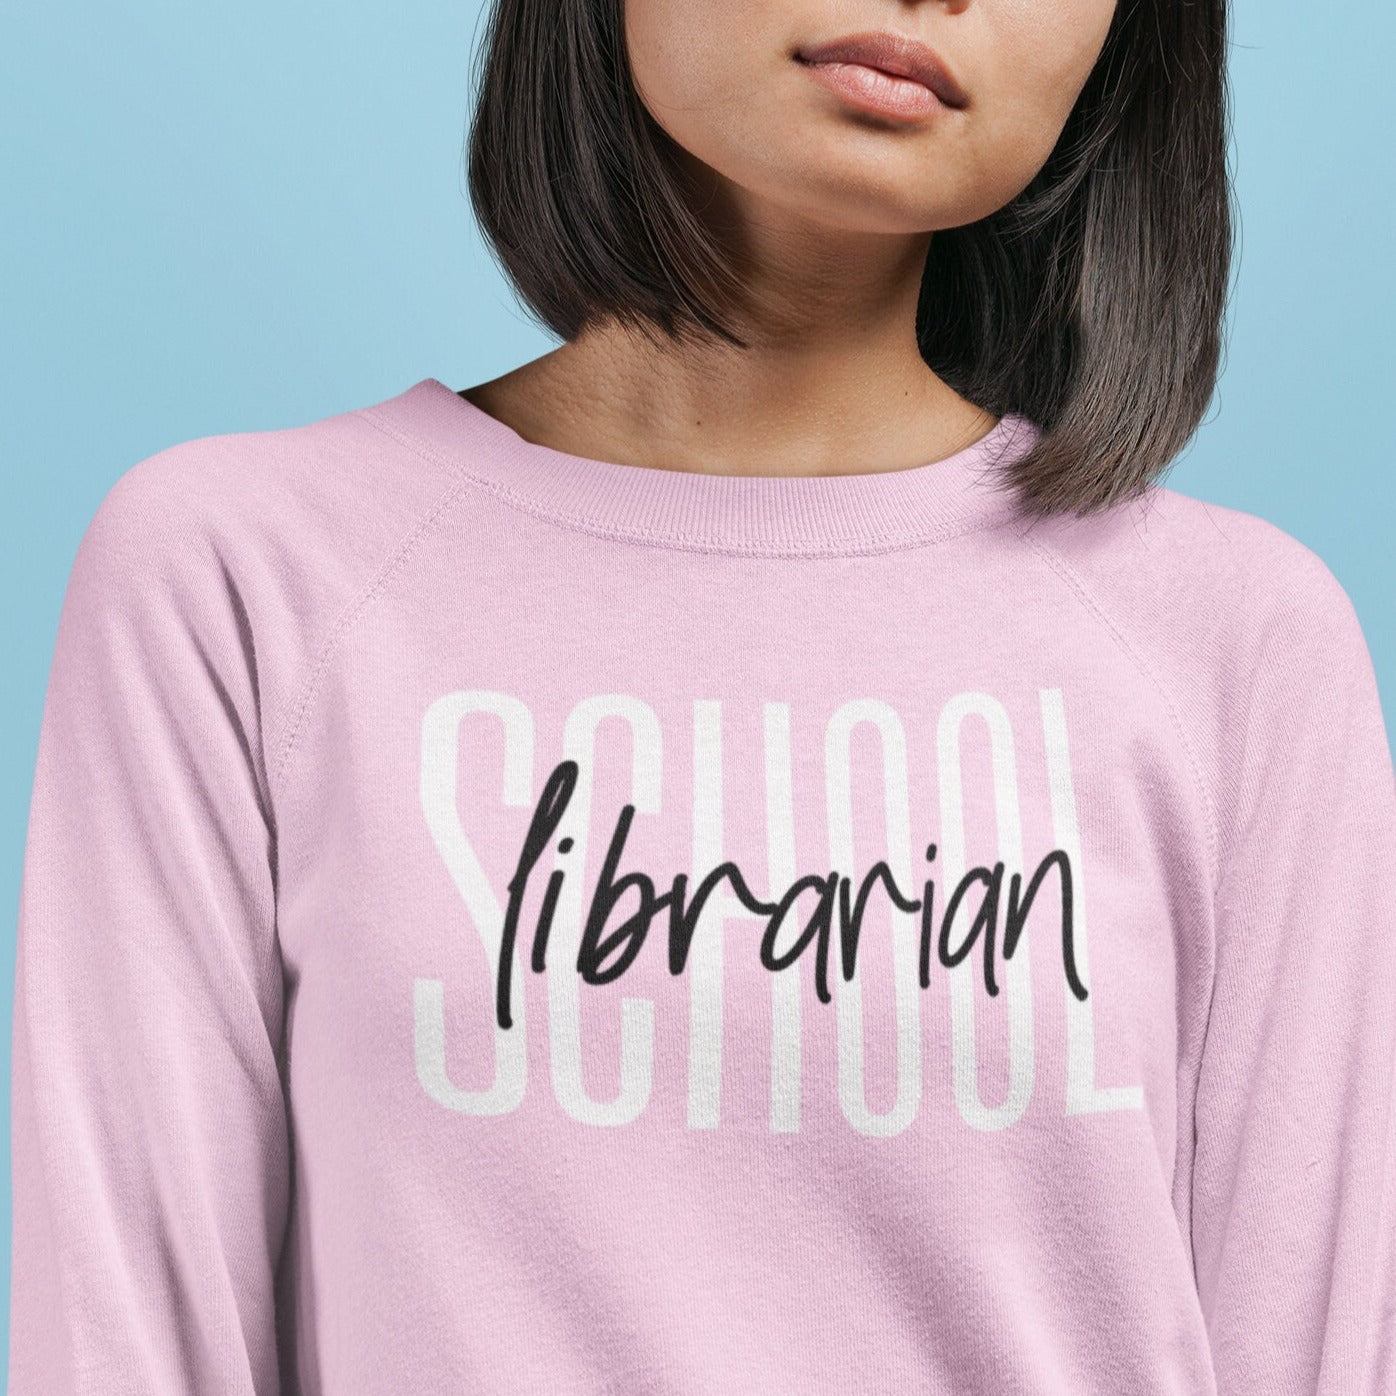 School Librarian Sweatshirt, School Assistant Book Lover, Cute Reading Book Office Sweater, High Middle Elementary Teach School, Admin Shirt